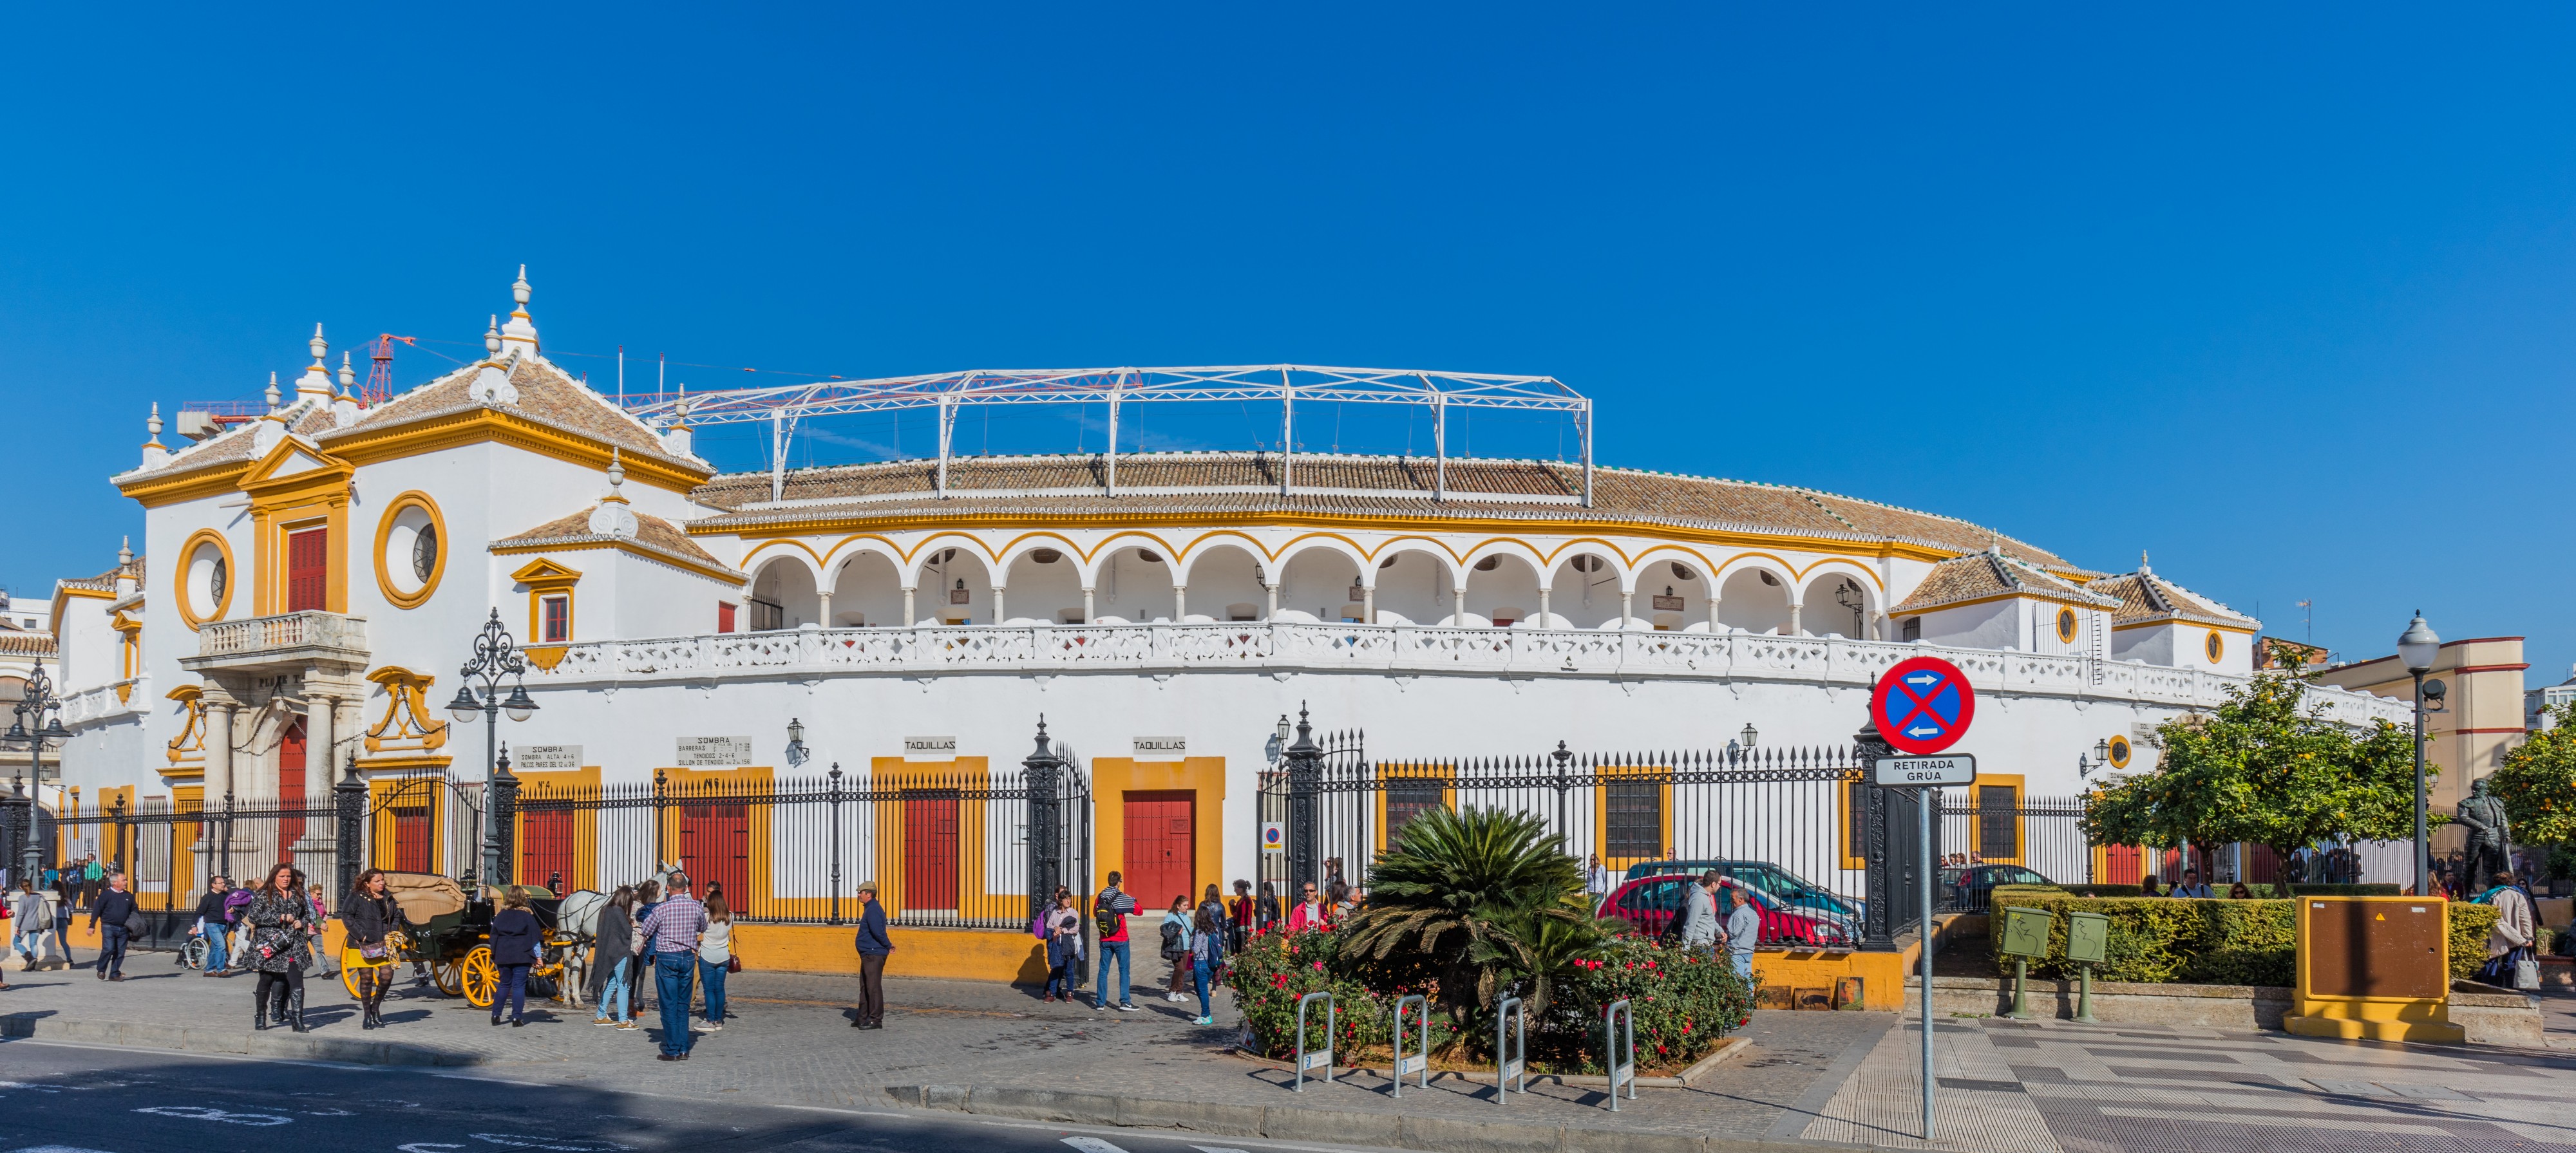 Plaza de toros de la Maestranza, Sevilla, España, 2015-12-06, DD 68